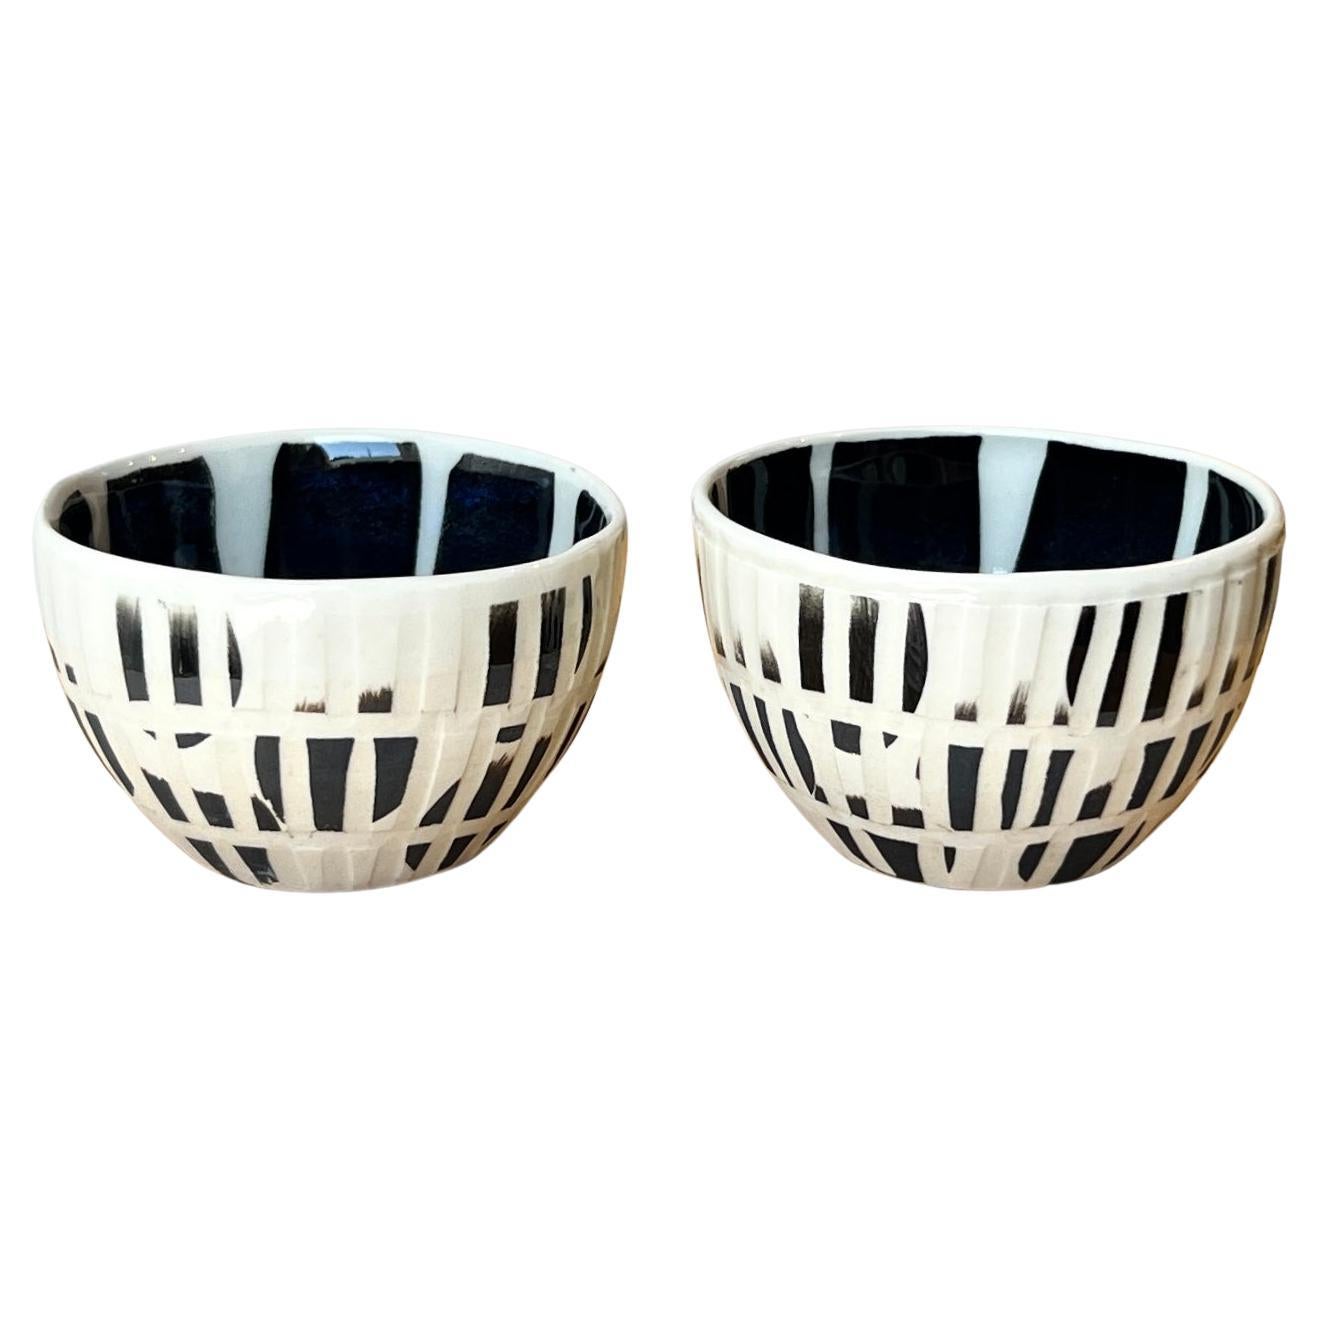 Celia Handmade Whimsical Ceramic Teacups, set of 2 from Portugal For Sale